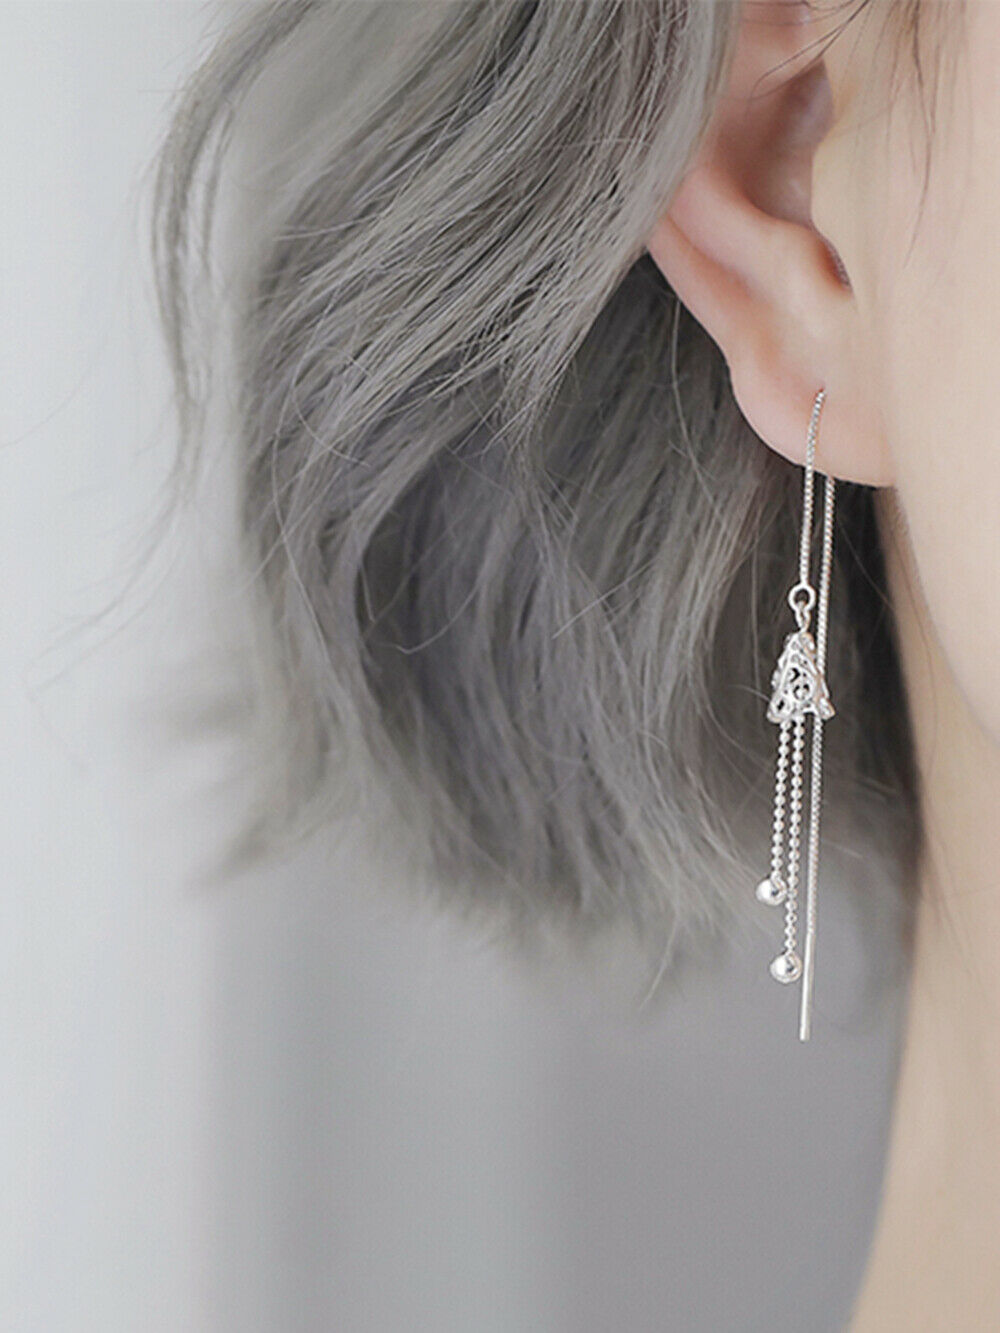 Silver Bead threader earrings.